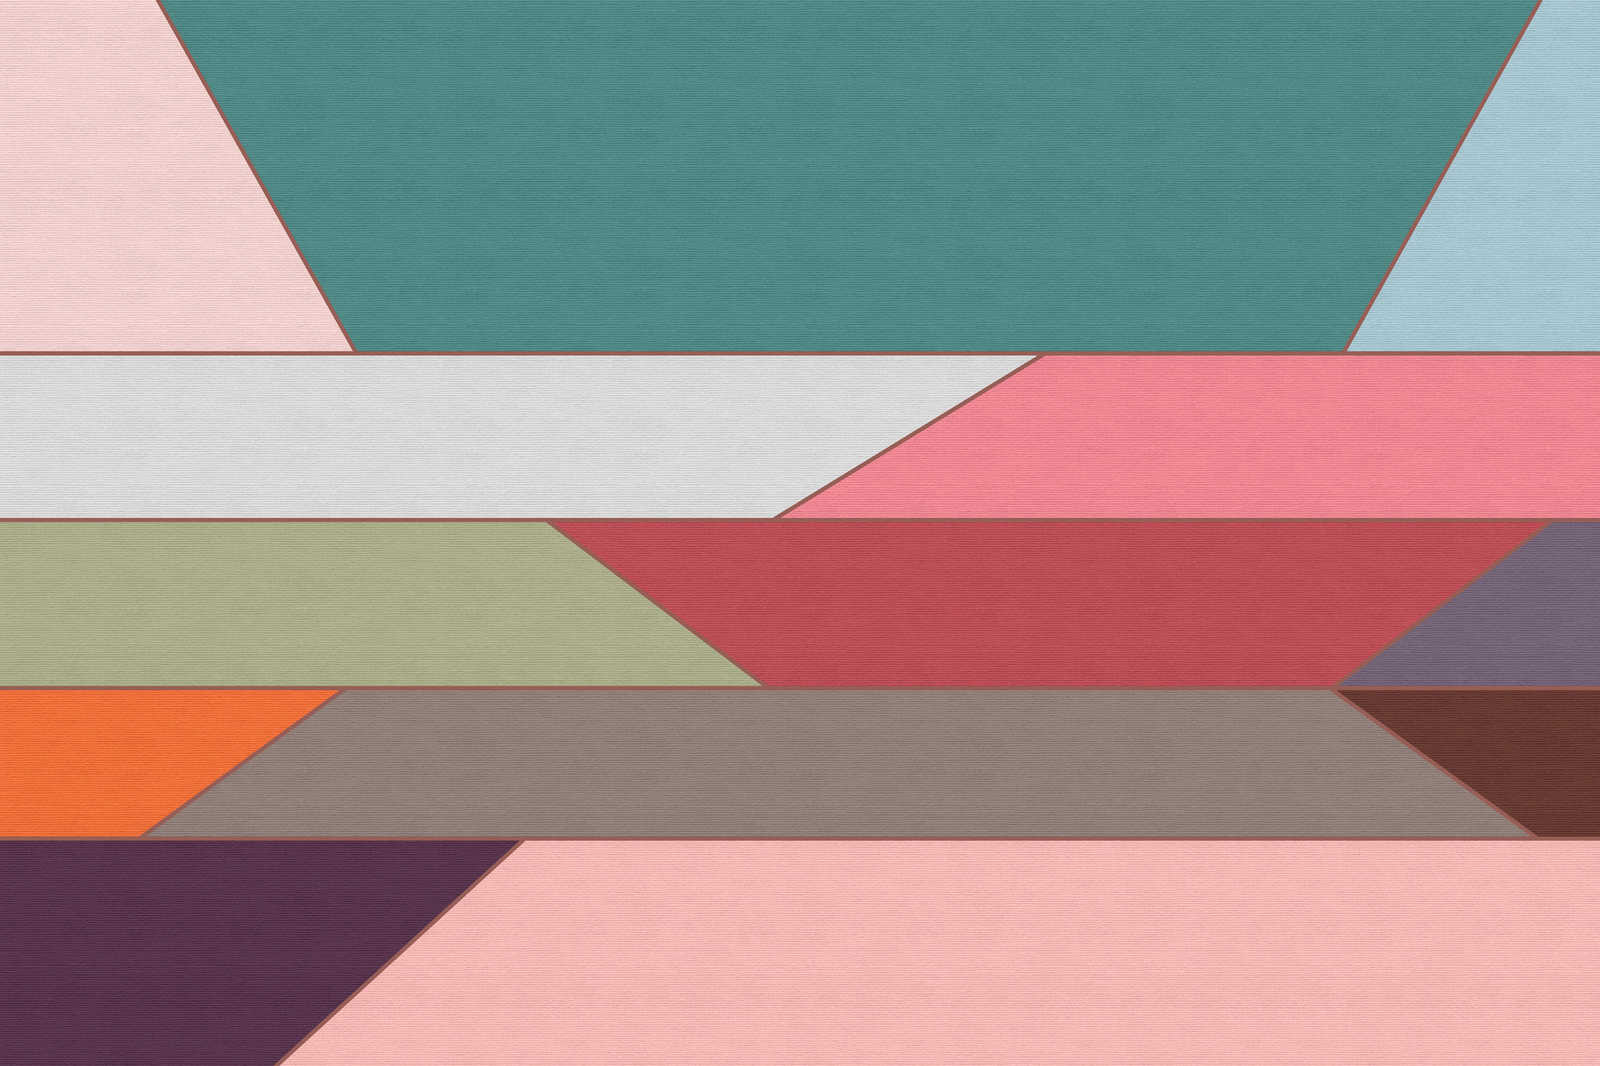             Geometría 2 - Pintura sobre lienzo con colorido motivo de rayas horizontales en estructura acanalada - 0,90 m x 0,60 m
        